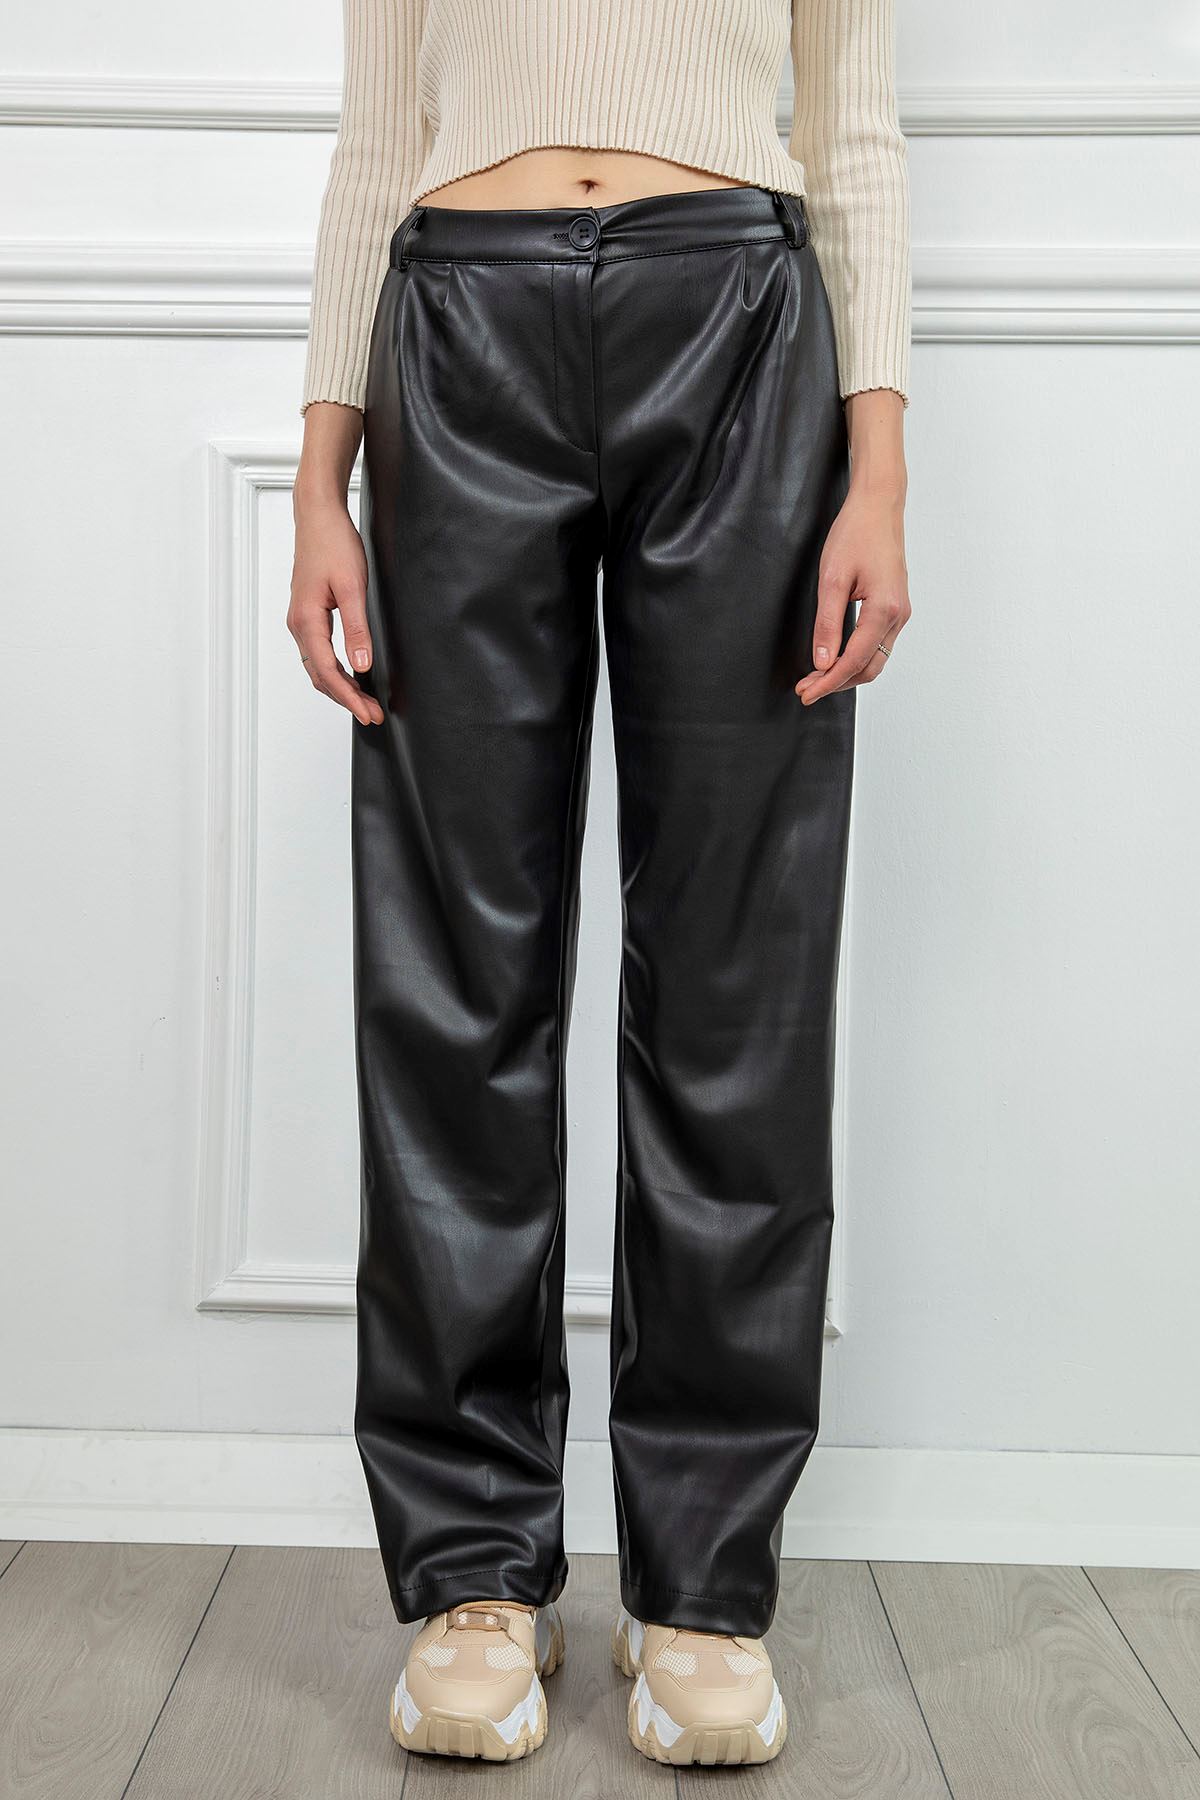 21K127-001-01 Leather Trousers Palazzo-Black - Black